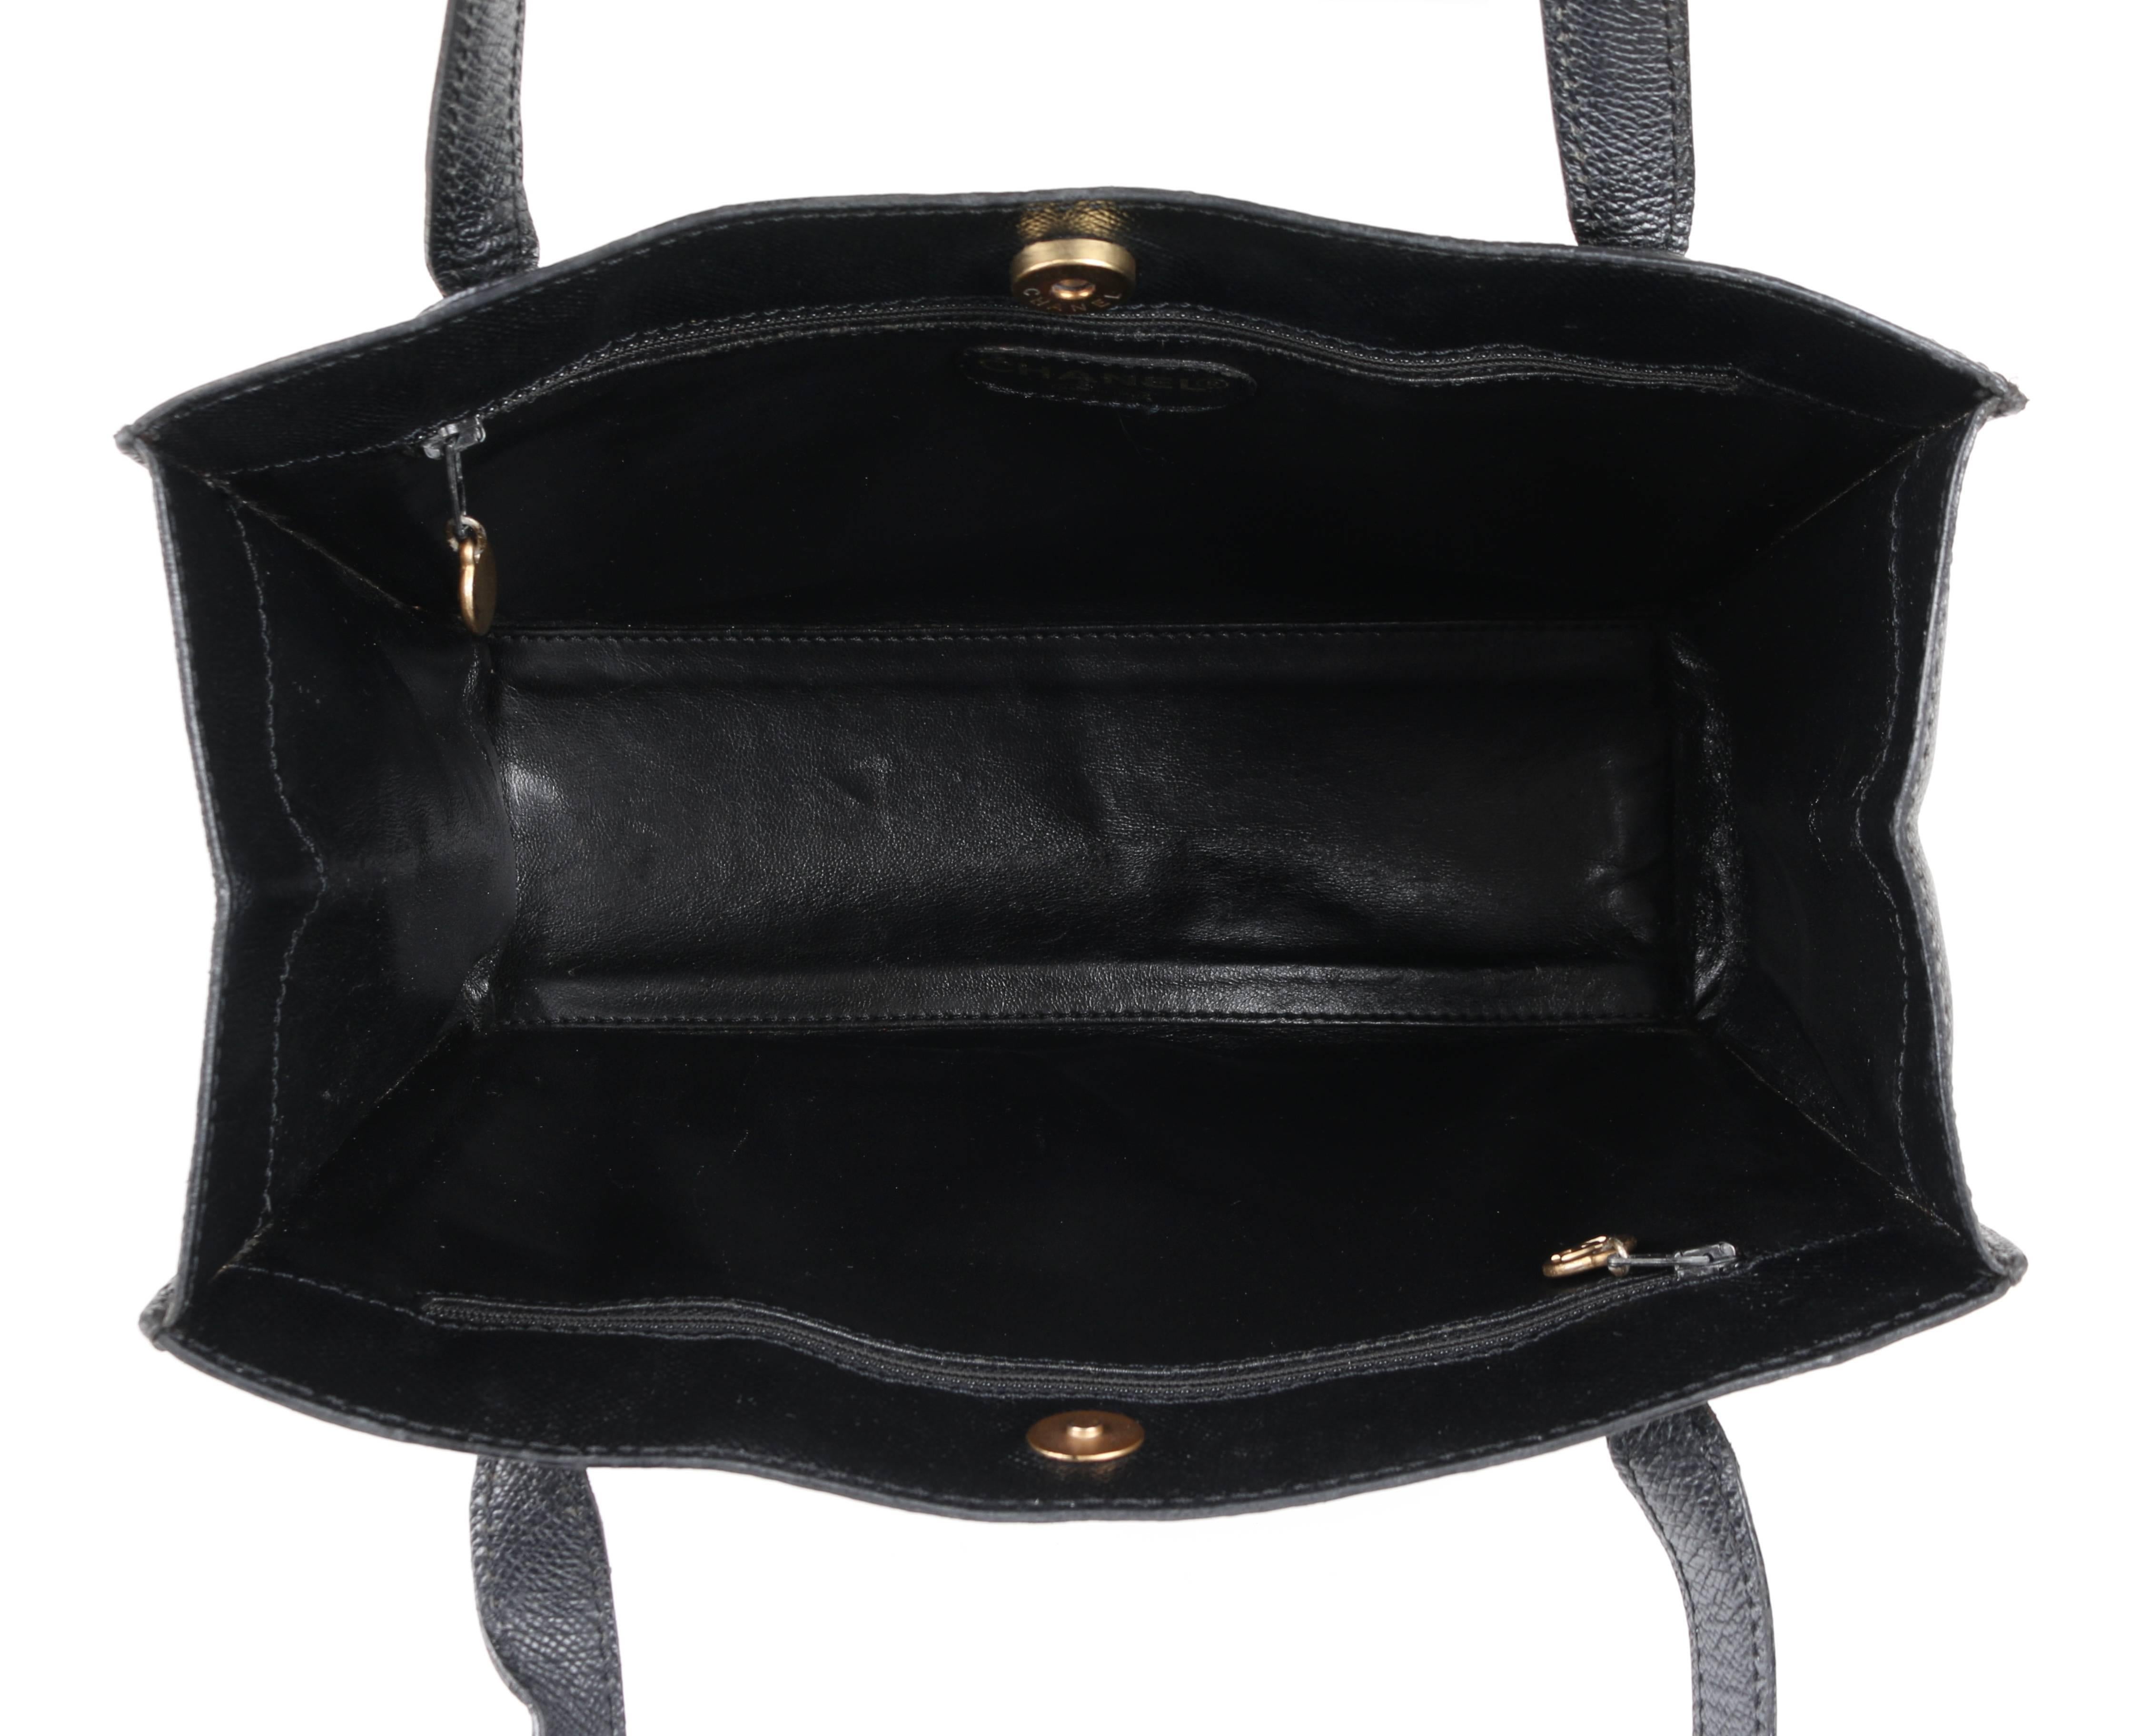 Women's CHANEL c.1990's Black Caviar Leather Structured Shoulder Bag Tote Handbag Purse 